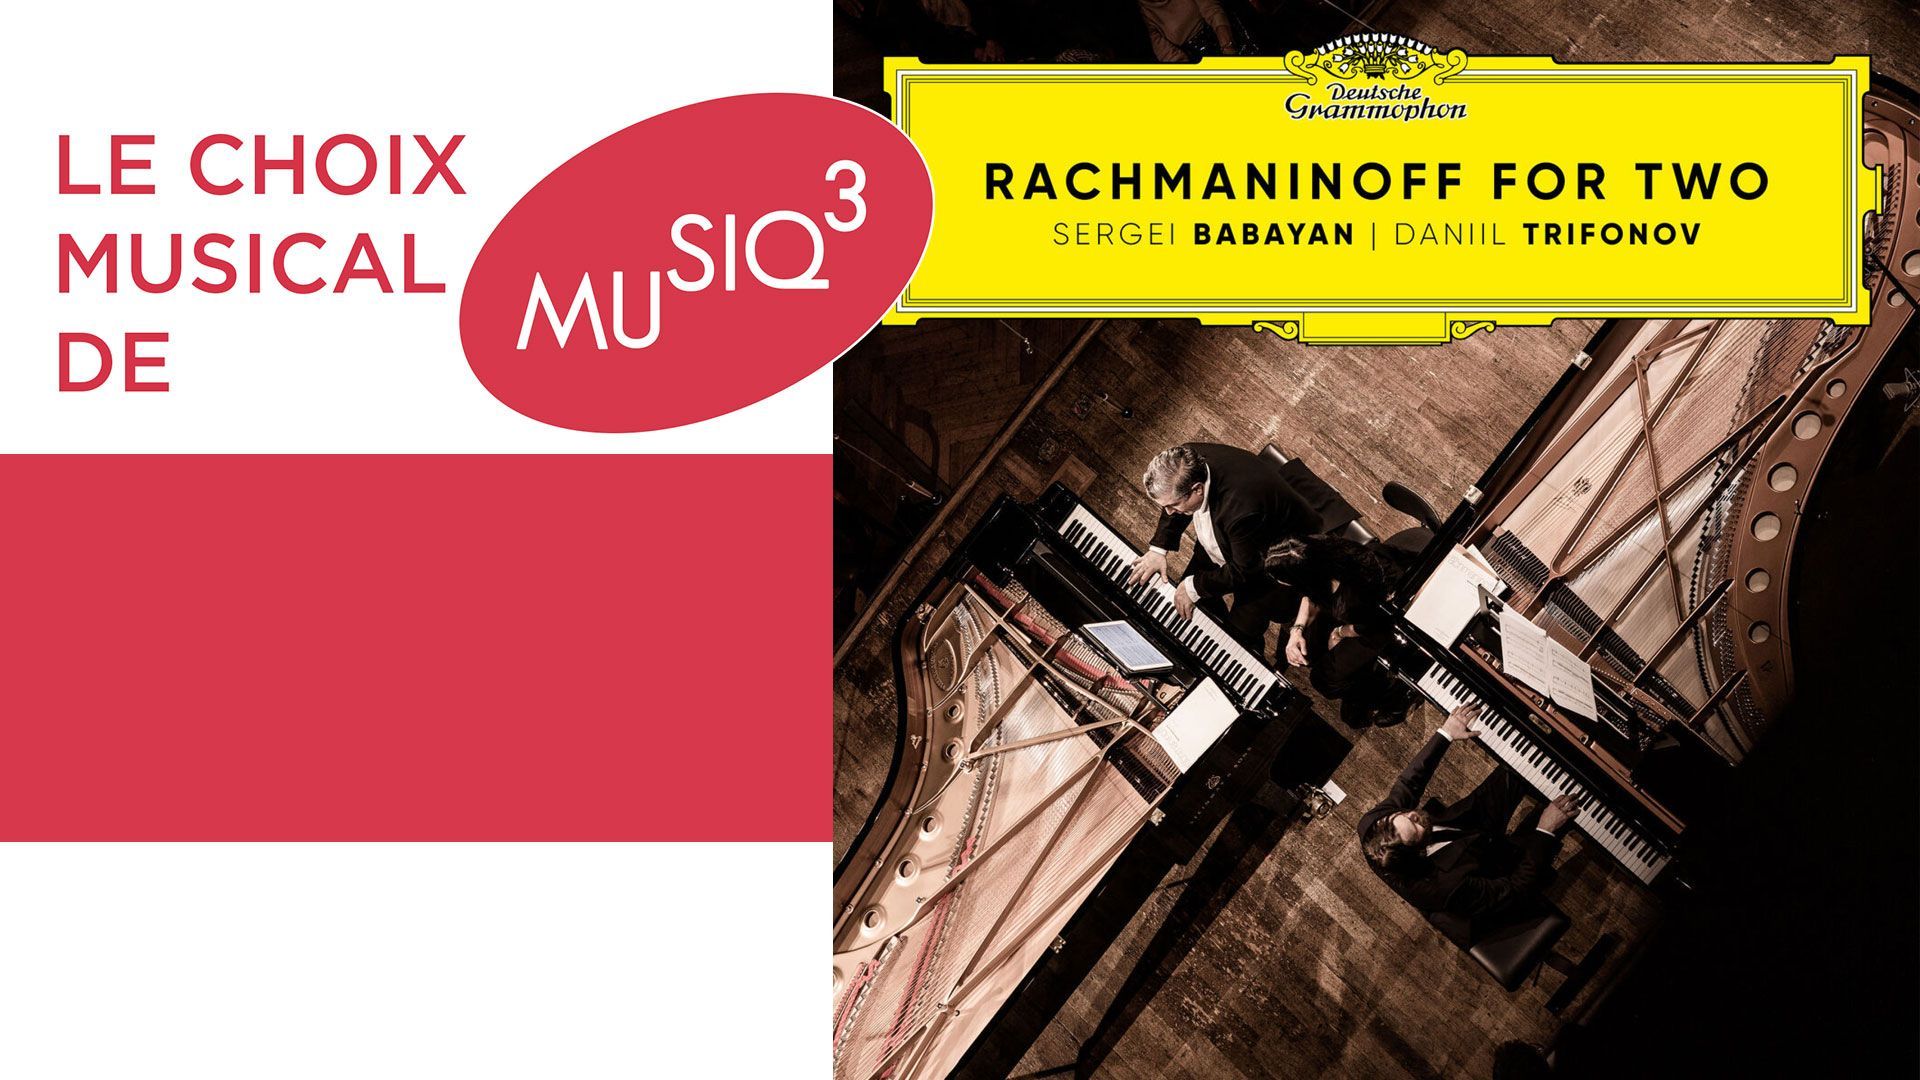 Rachmaninoff for two : un raz-de-marée pianistique